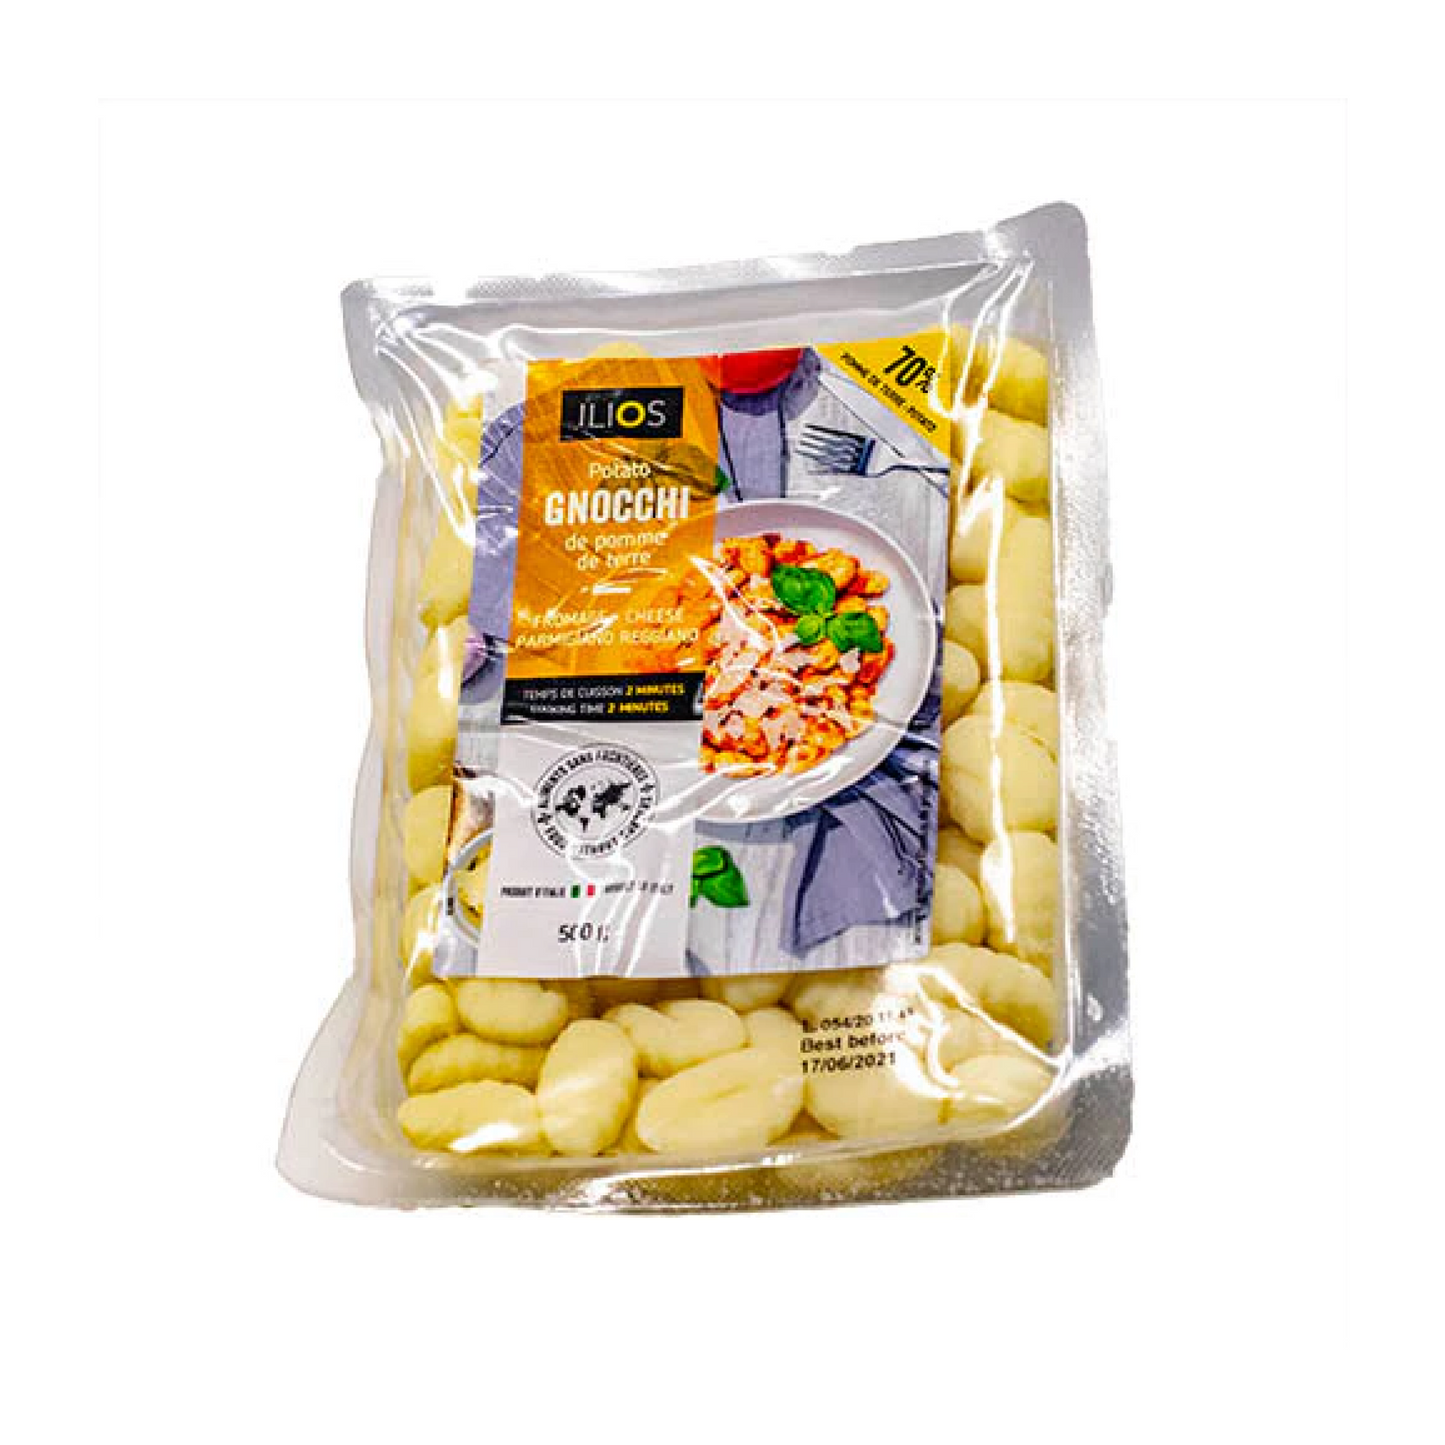 Ilios Potato Gnocchi with Parmigiano Reggiano 500g